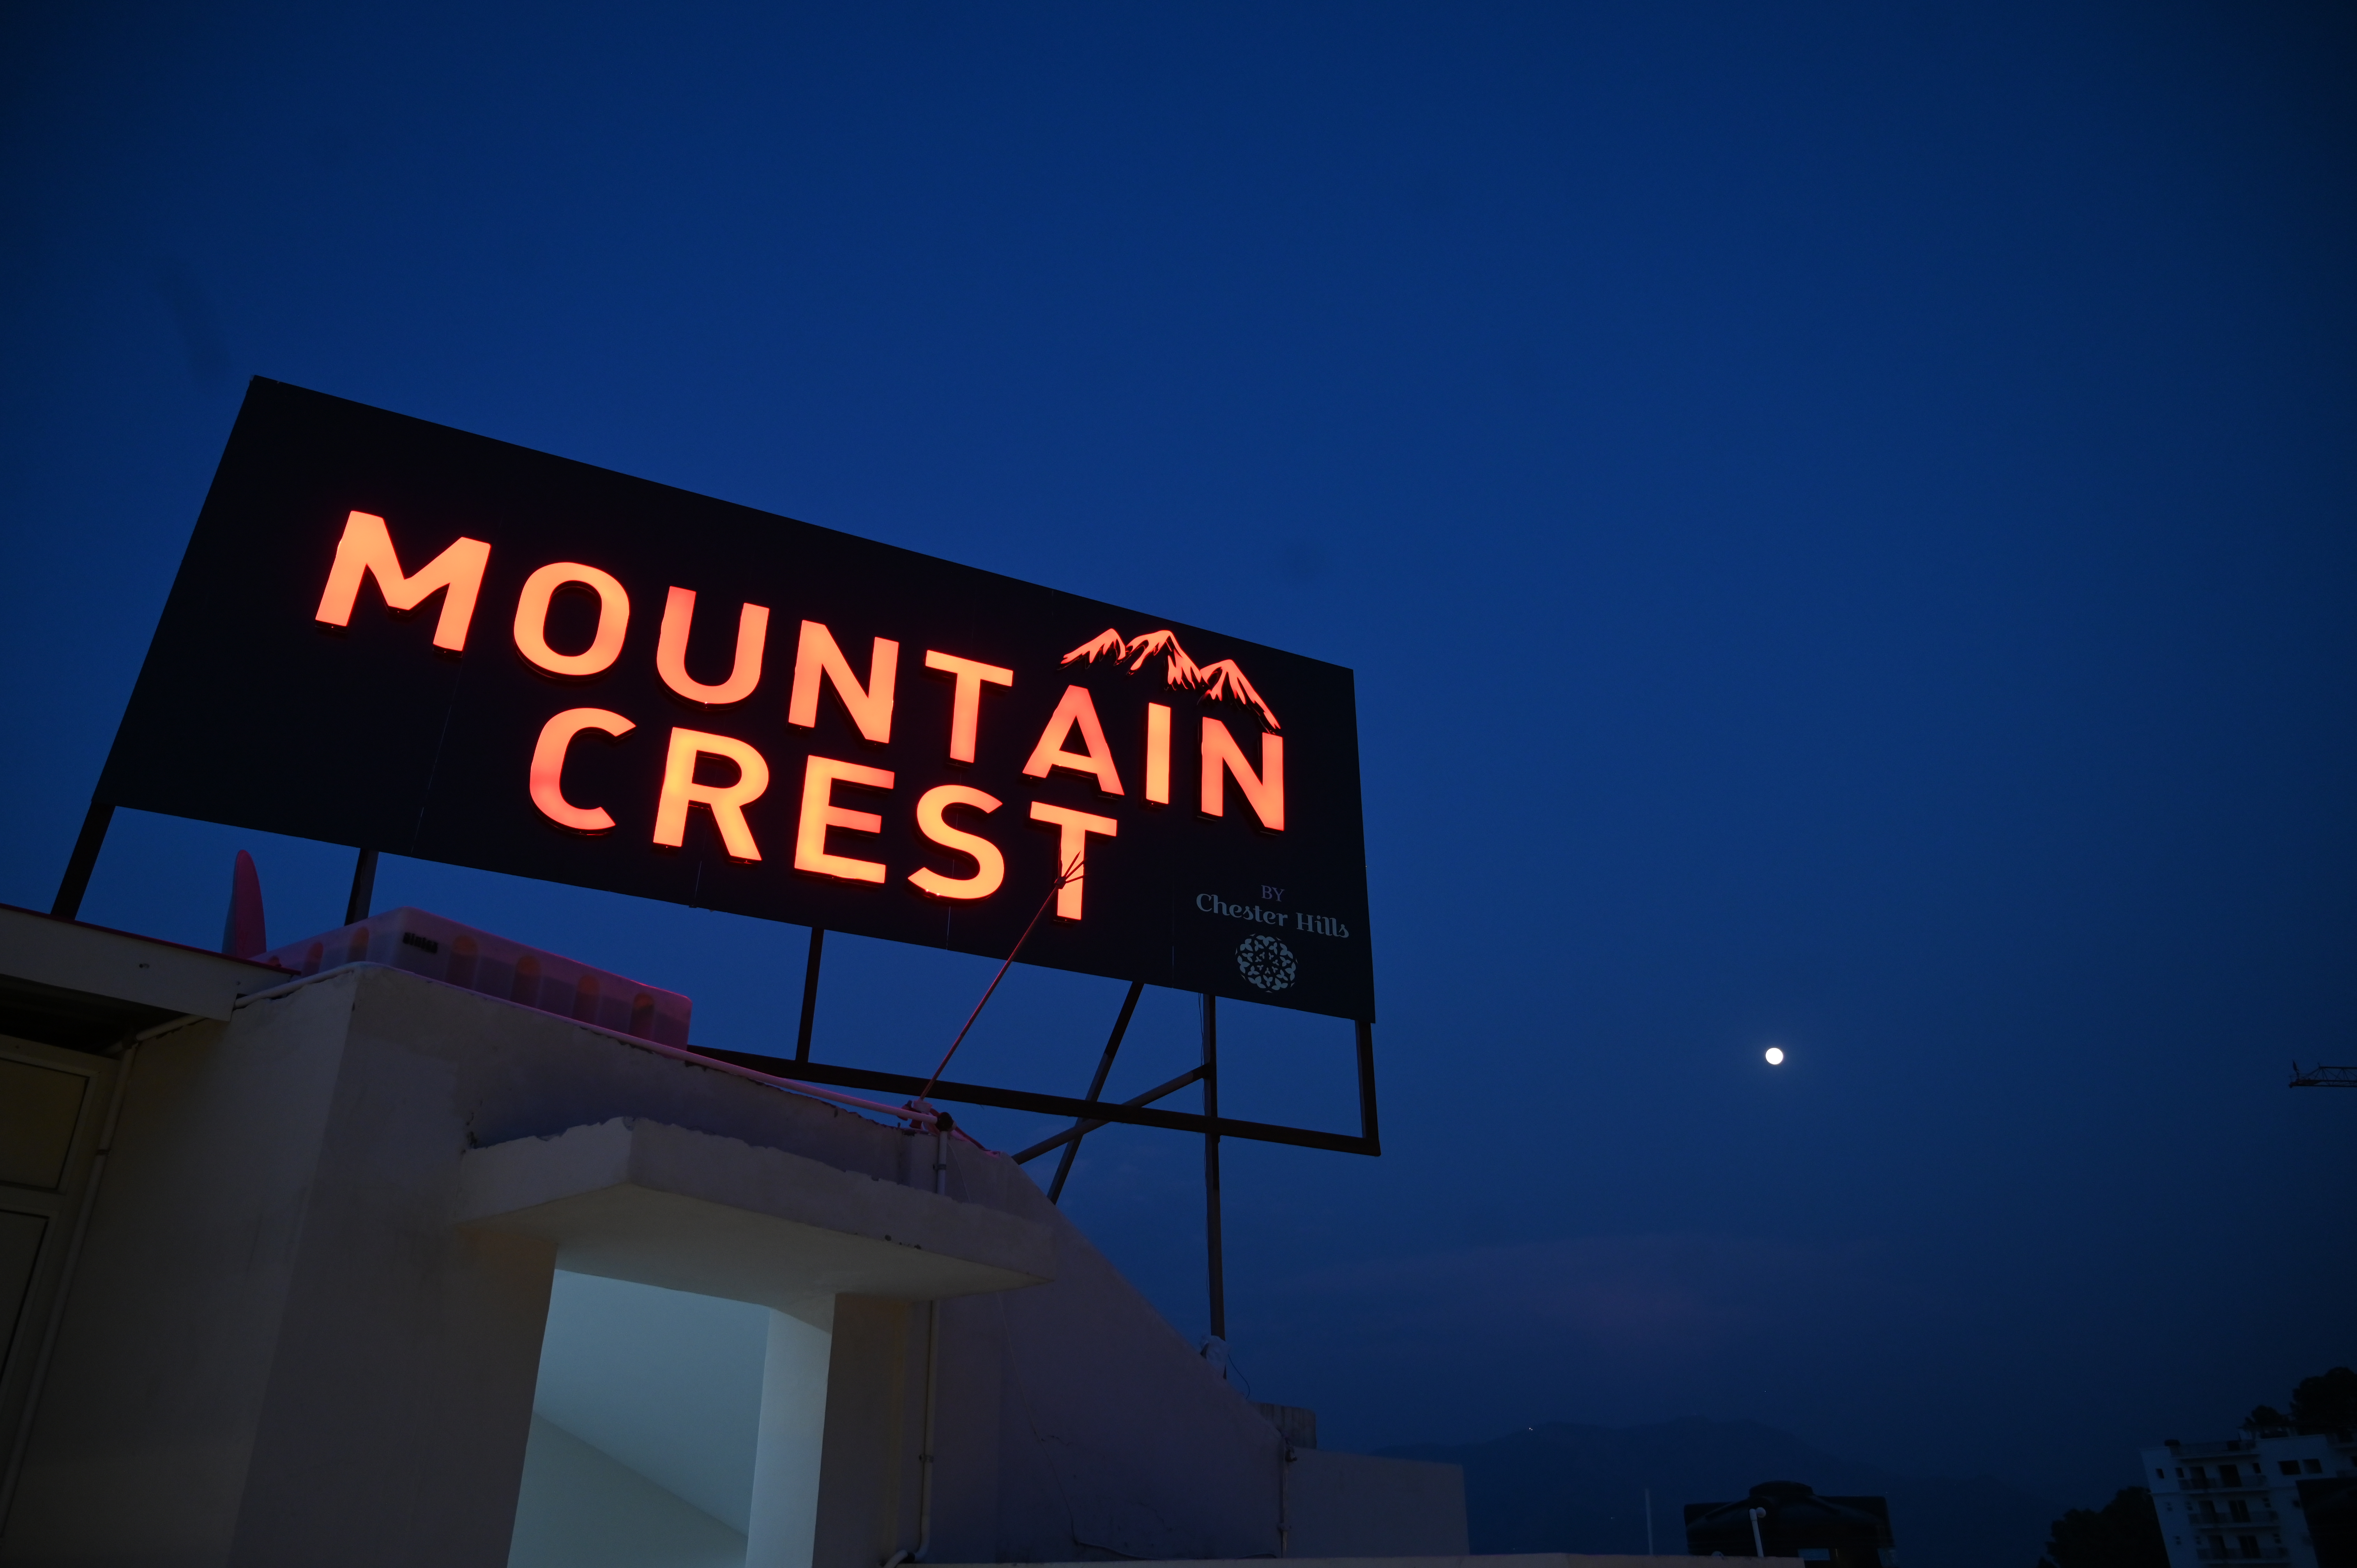 Mountain Crest Hotel